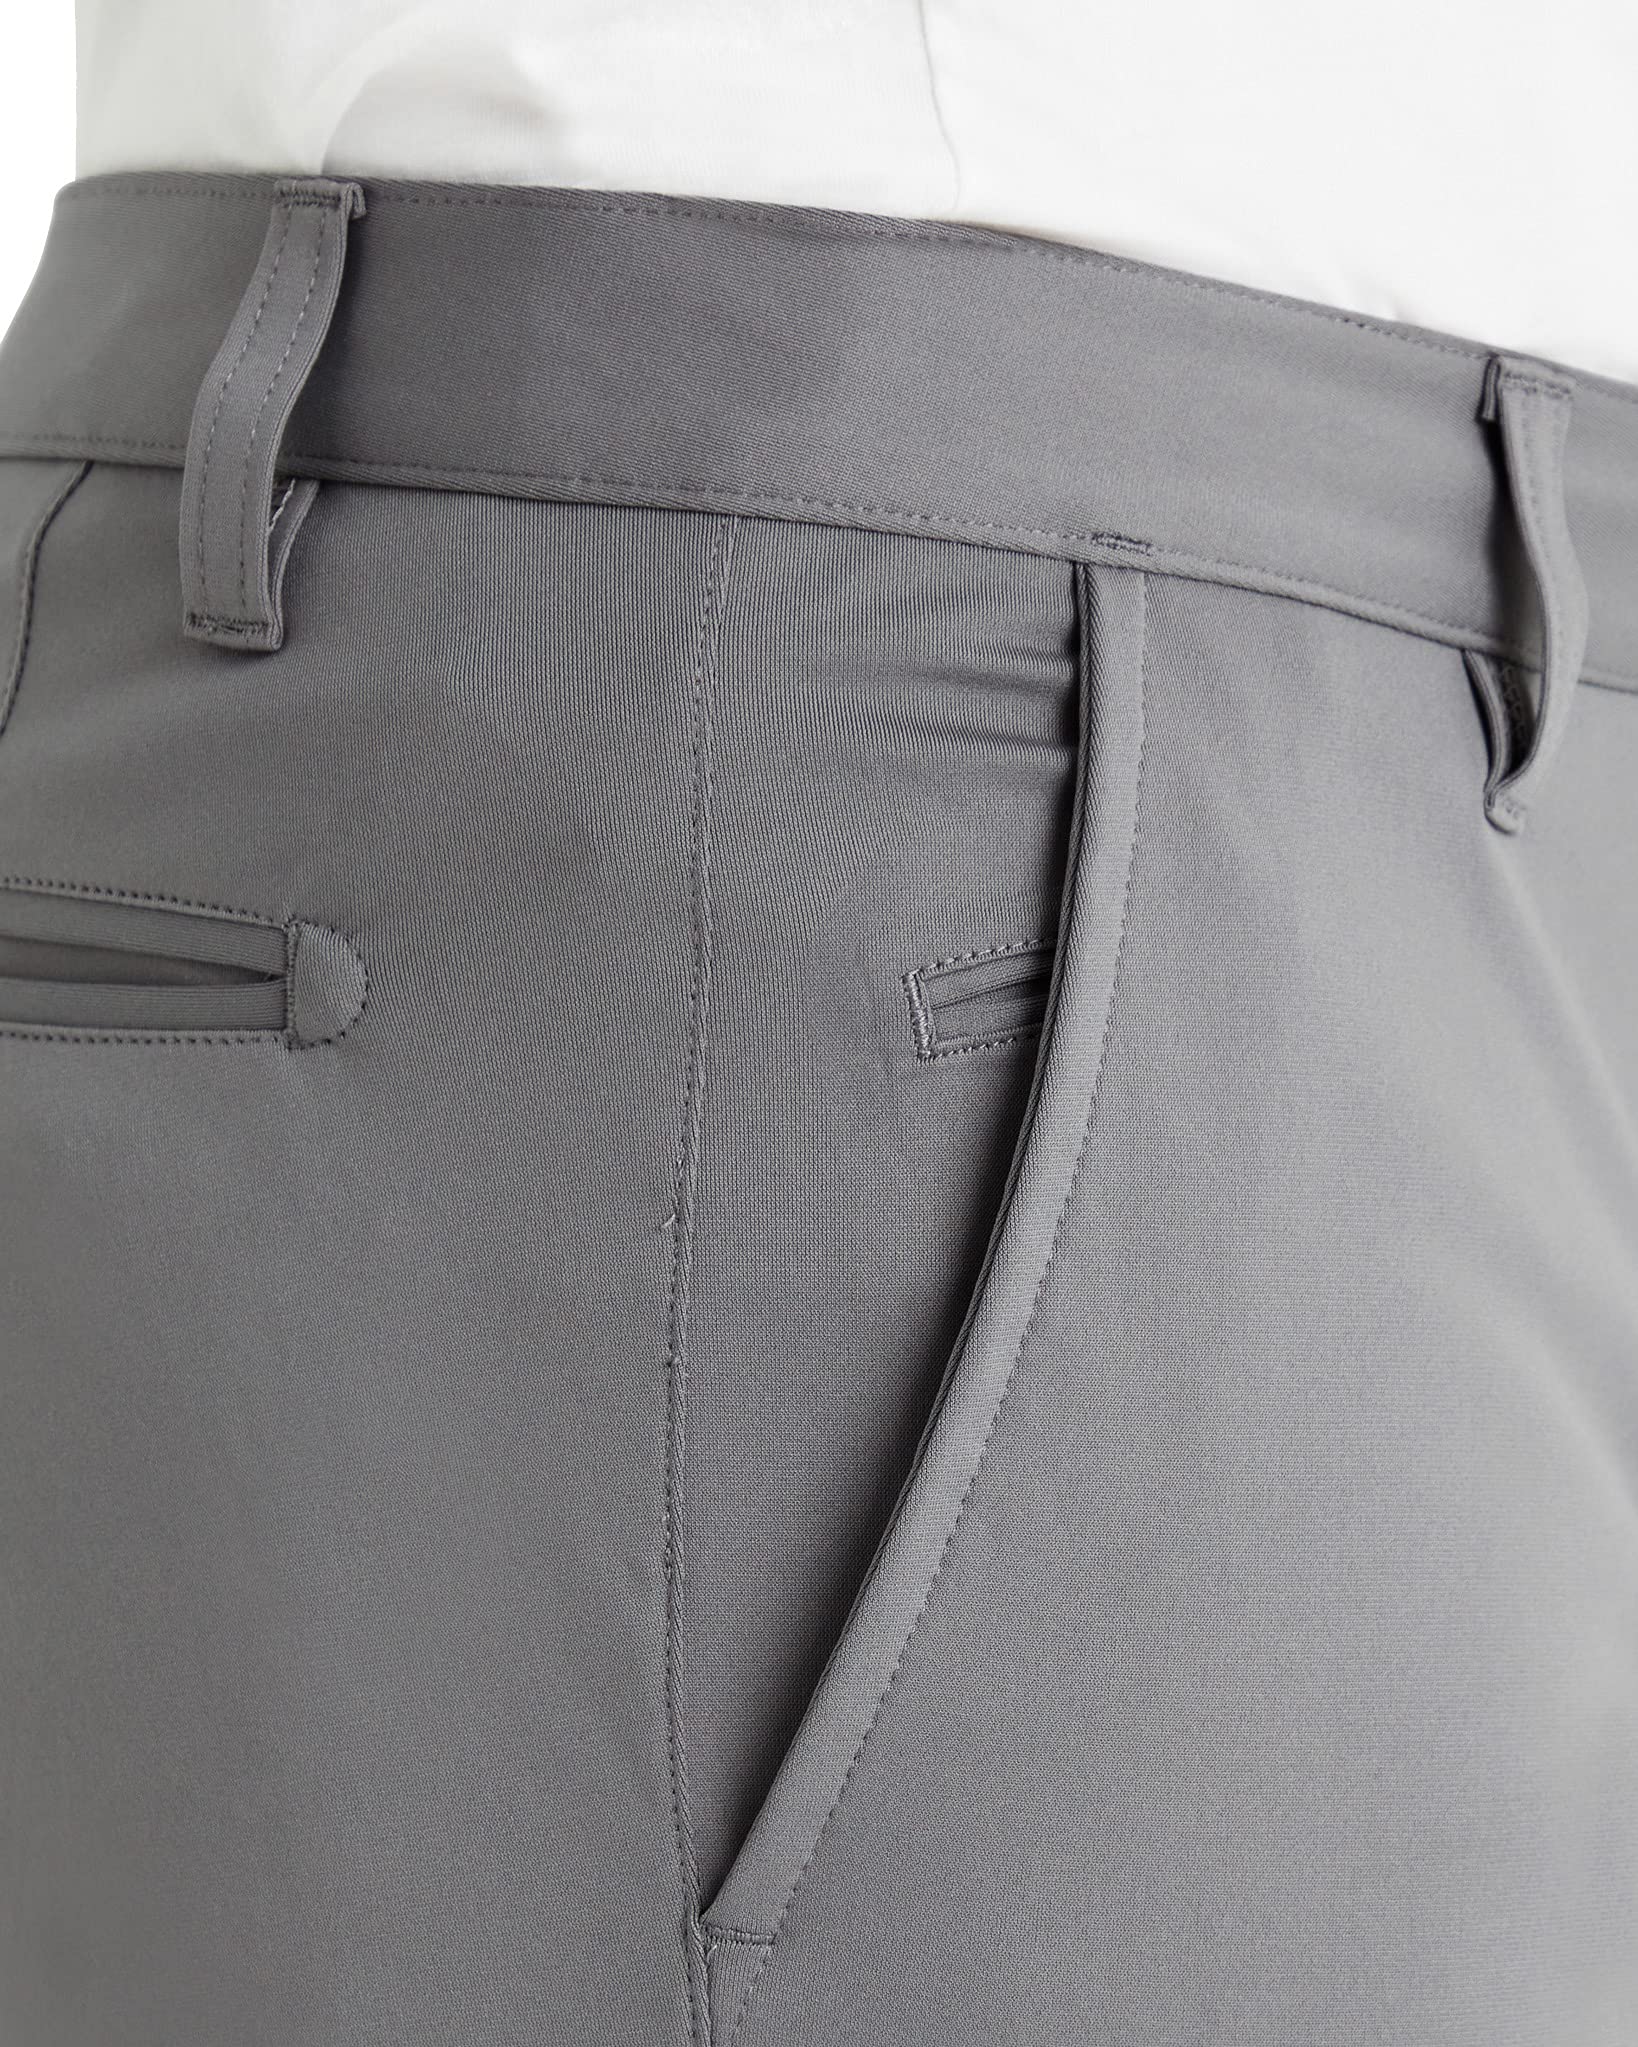 Charles Tyrwhitt Blue Flat Front Mens Extra Slim Fit Dress Pants Size 32 x  26 | eBay